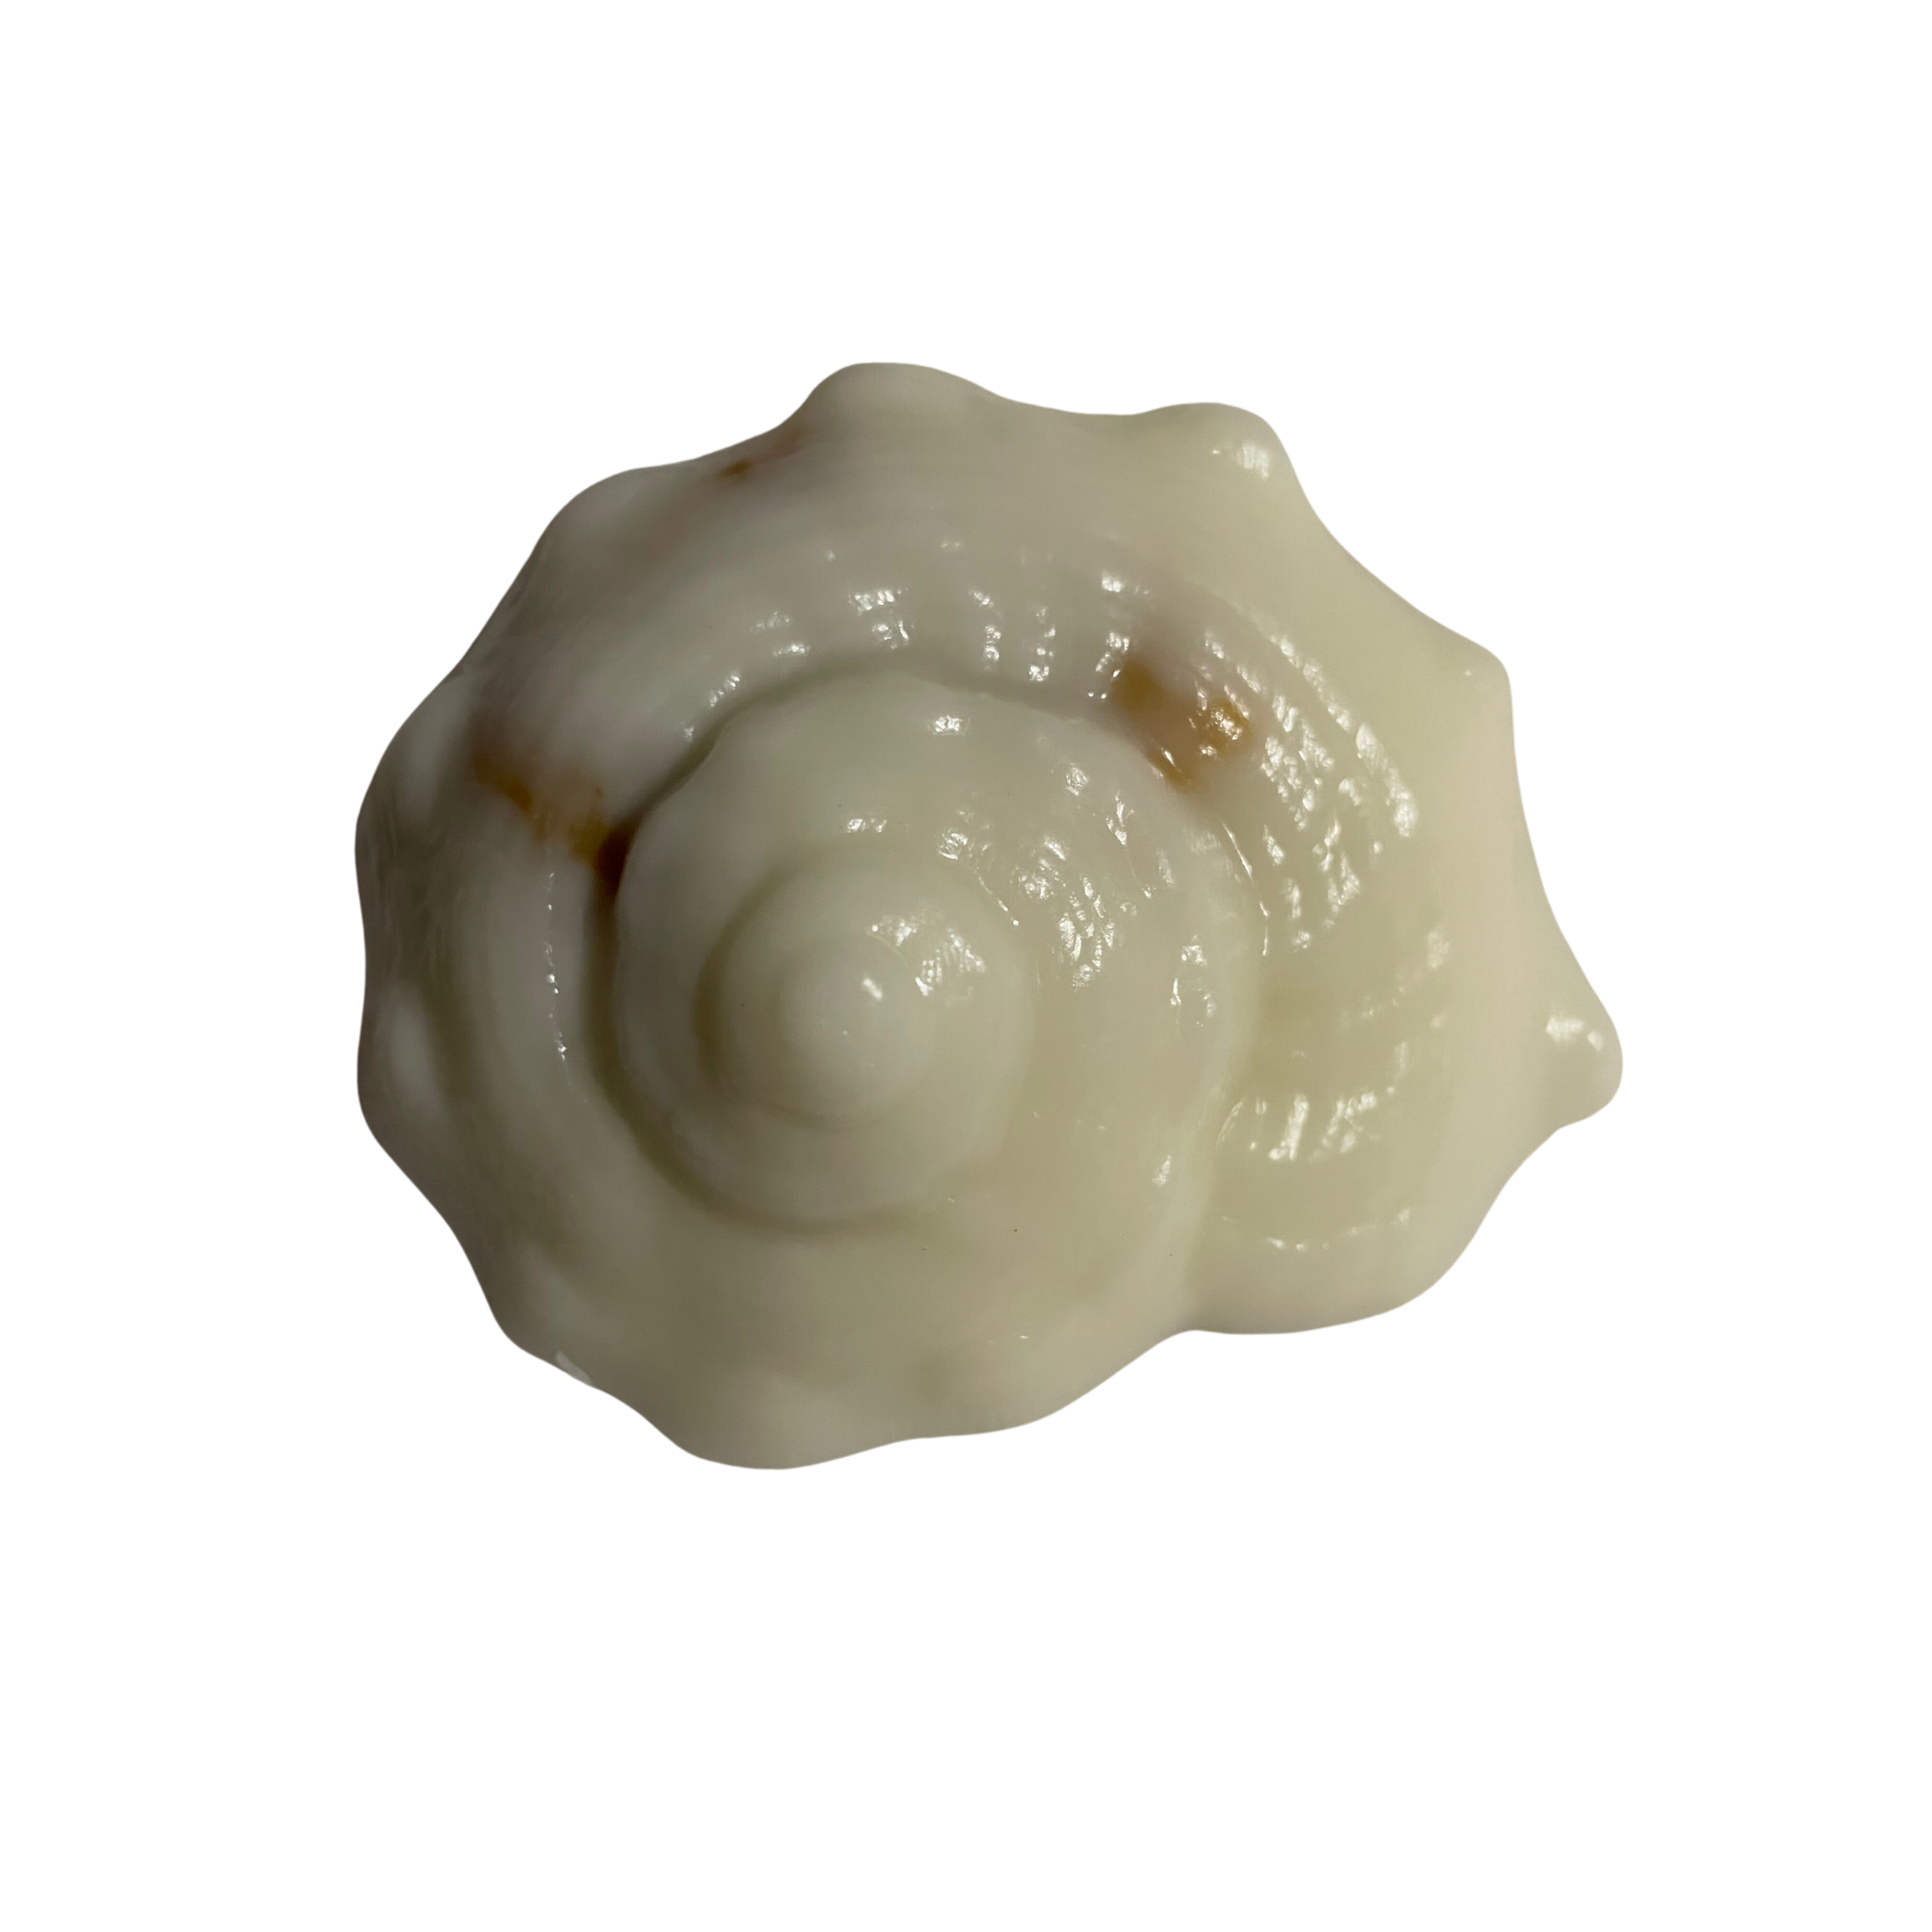 White Sea Shell Shaped Soap - Conch